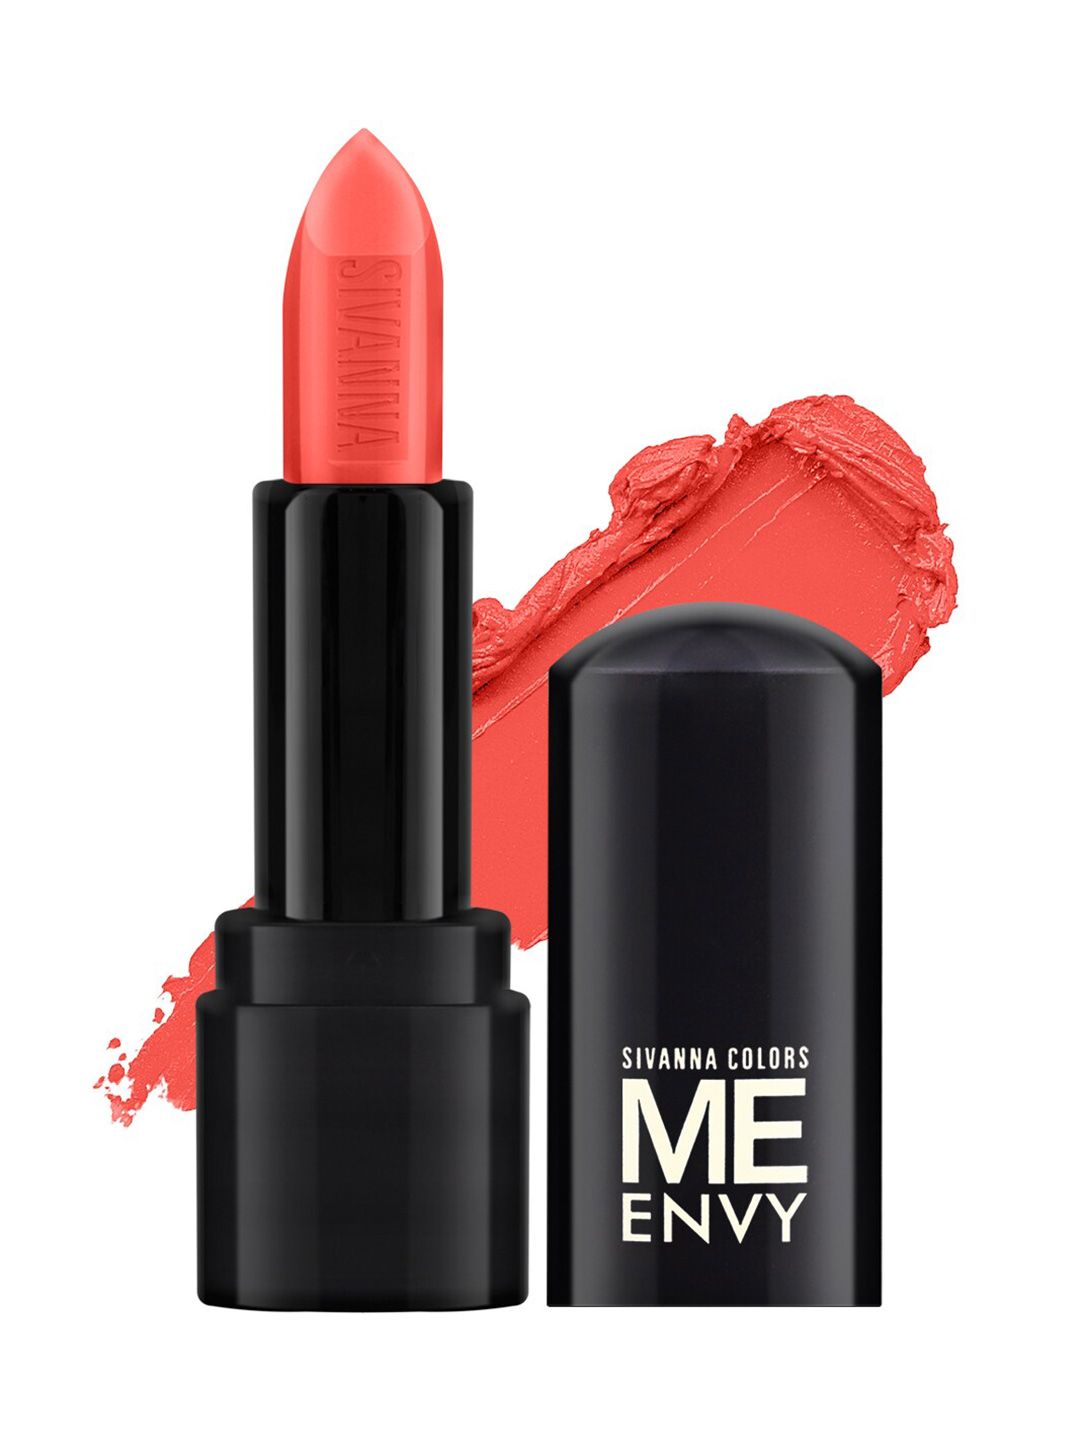 Sivanna Colors Orange Me Envy Matte & Gloosy Lipstick-HF50112 09 Price in India